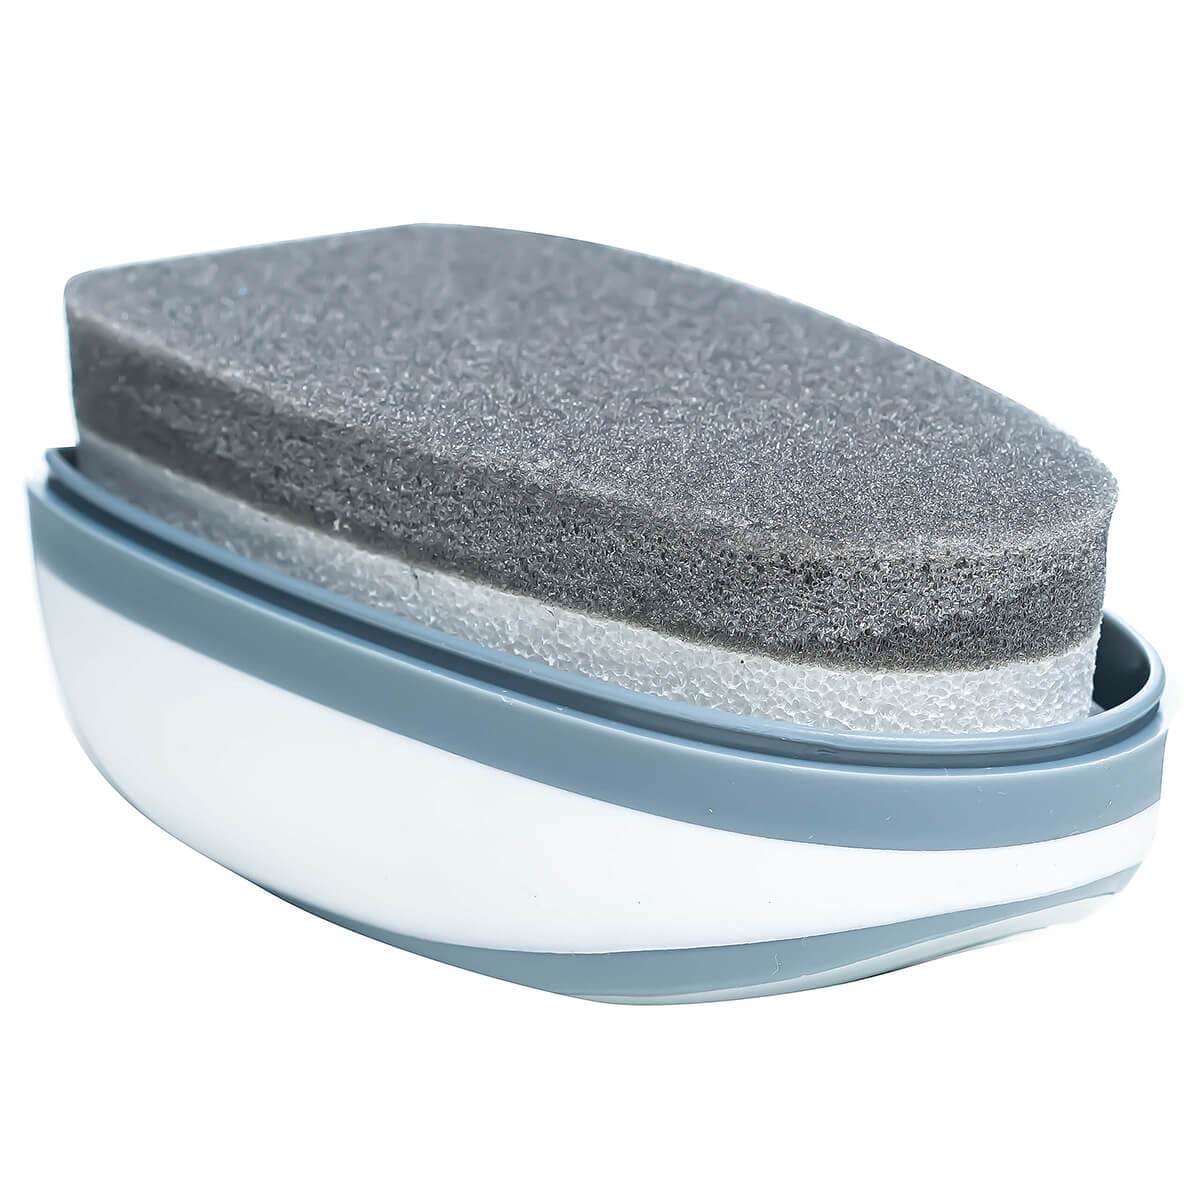 Clear polishing sponge - Shoe care products